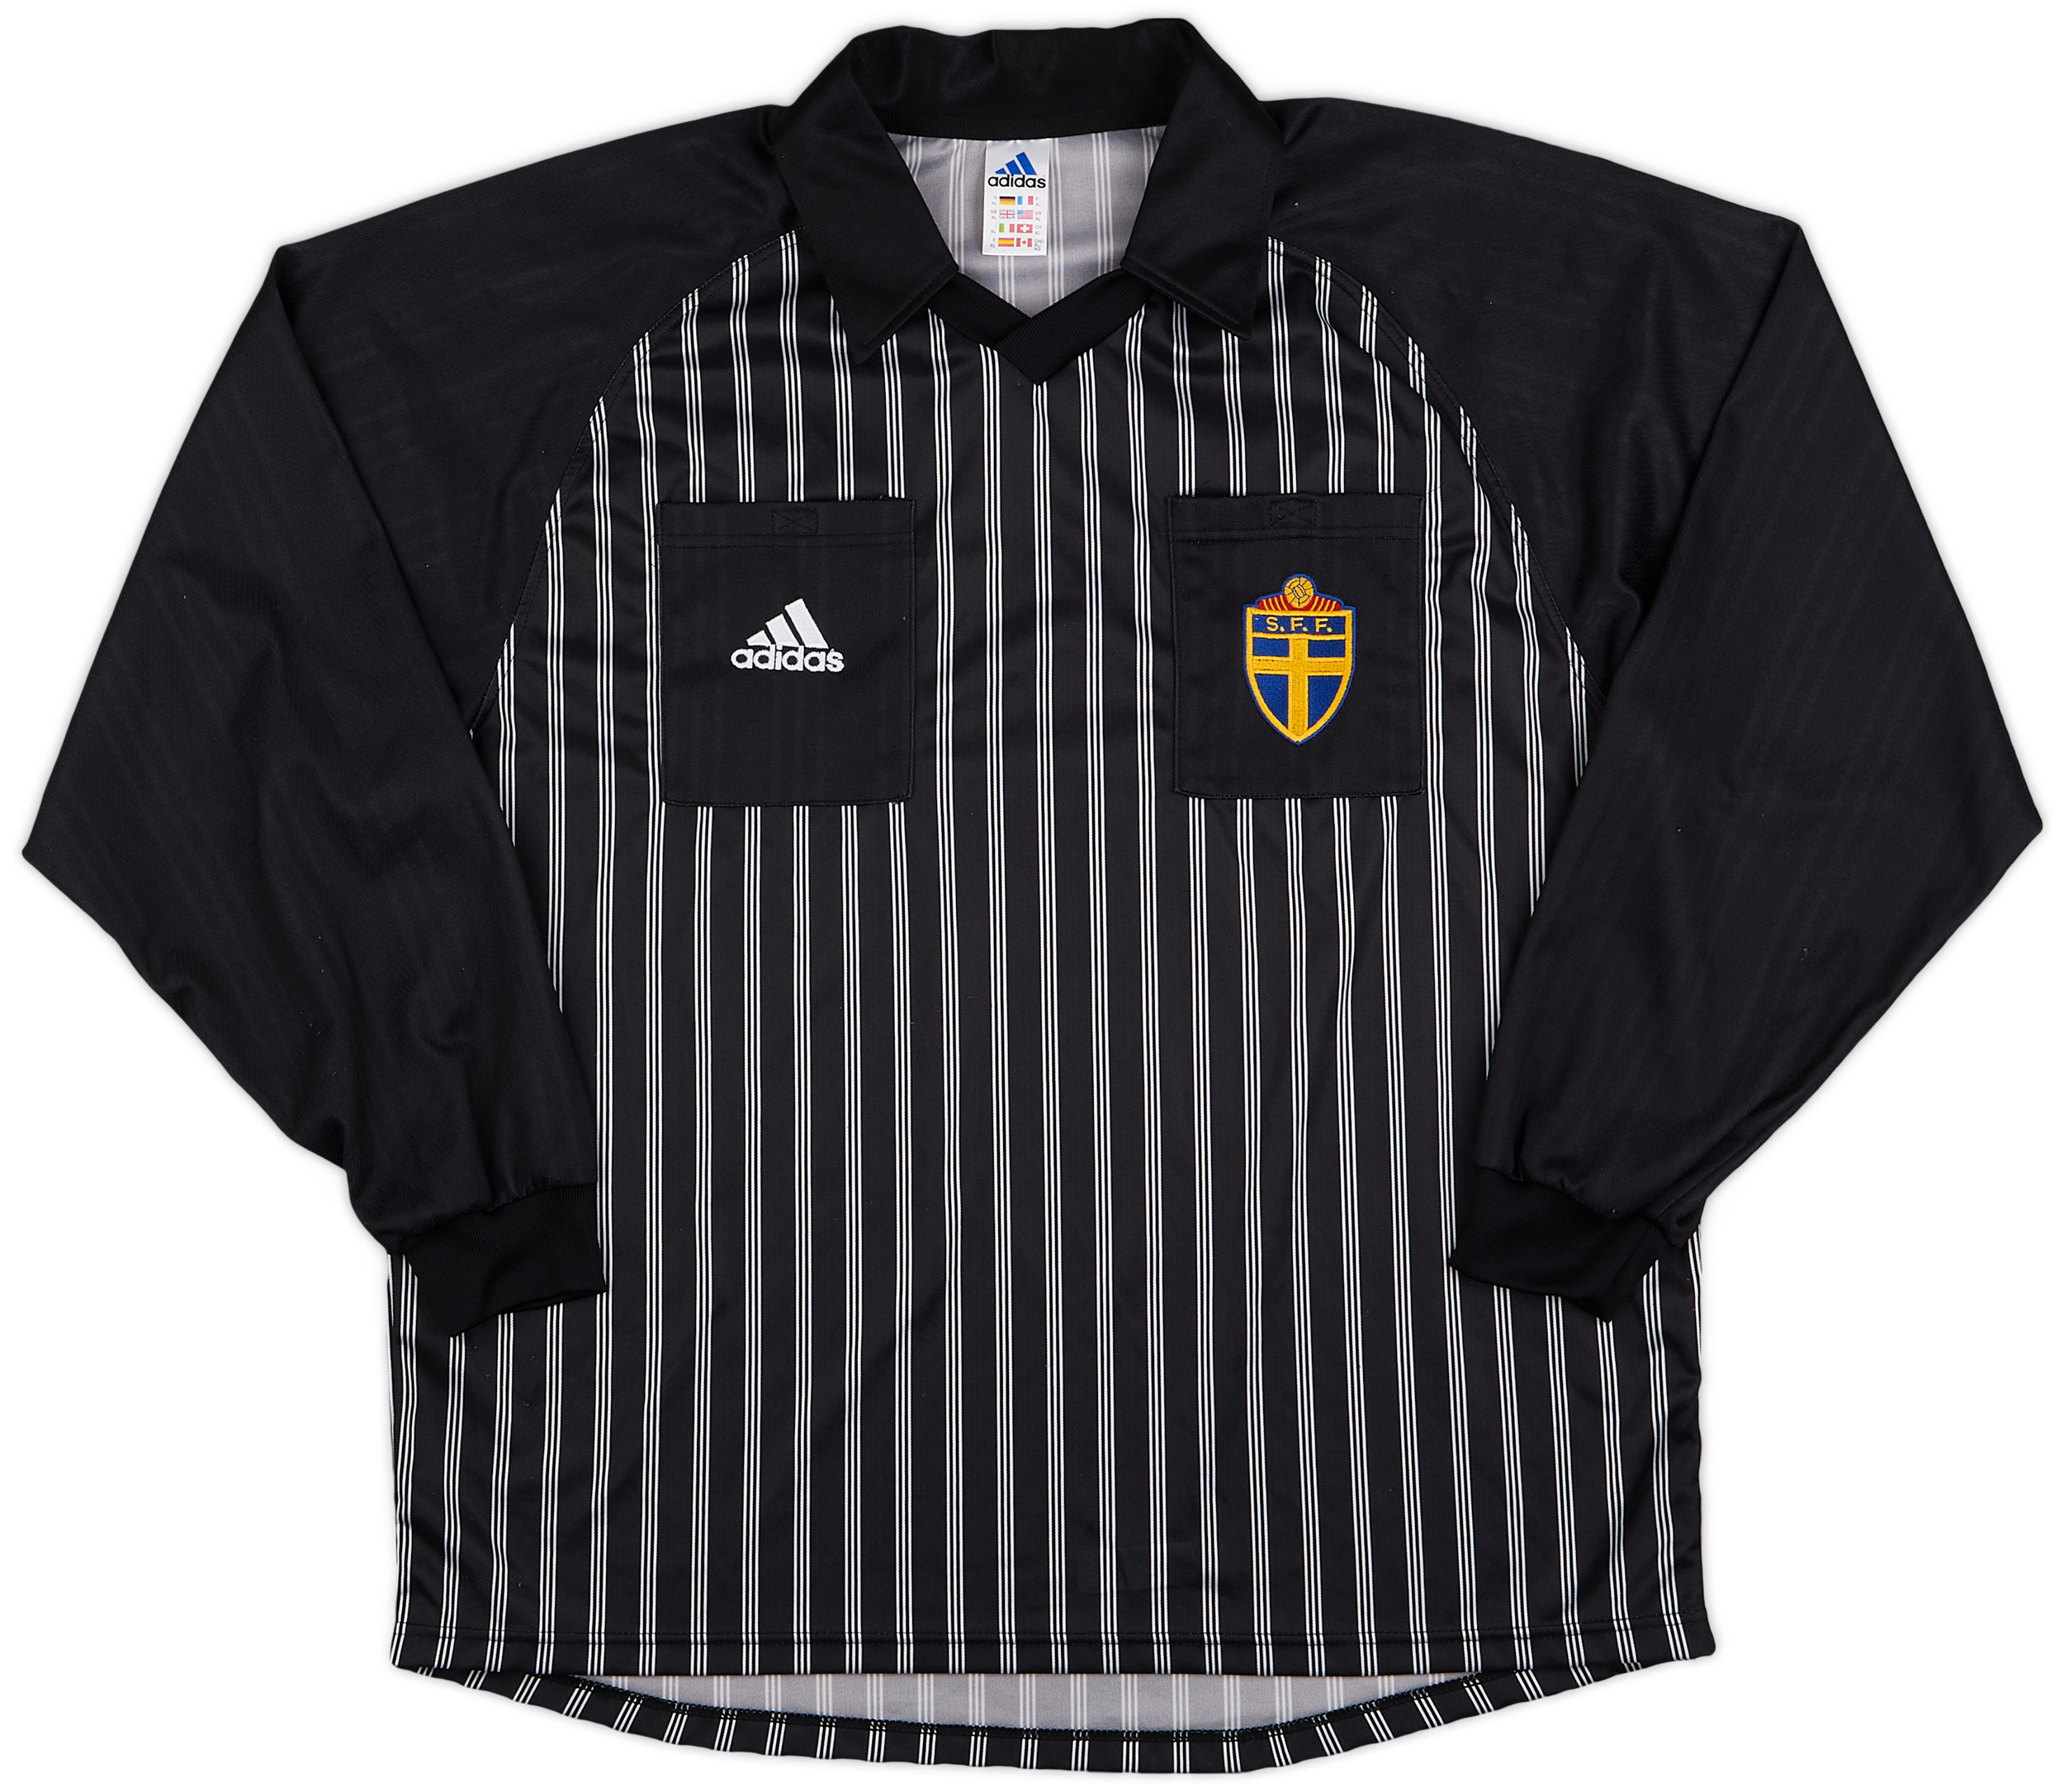 1990s Sweden adidas Referee Shirt - 9/10 - ()